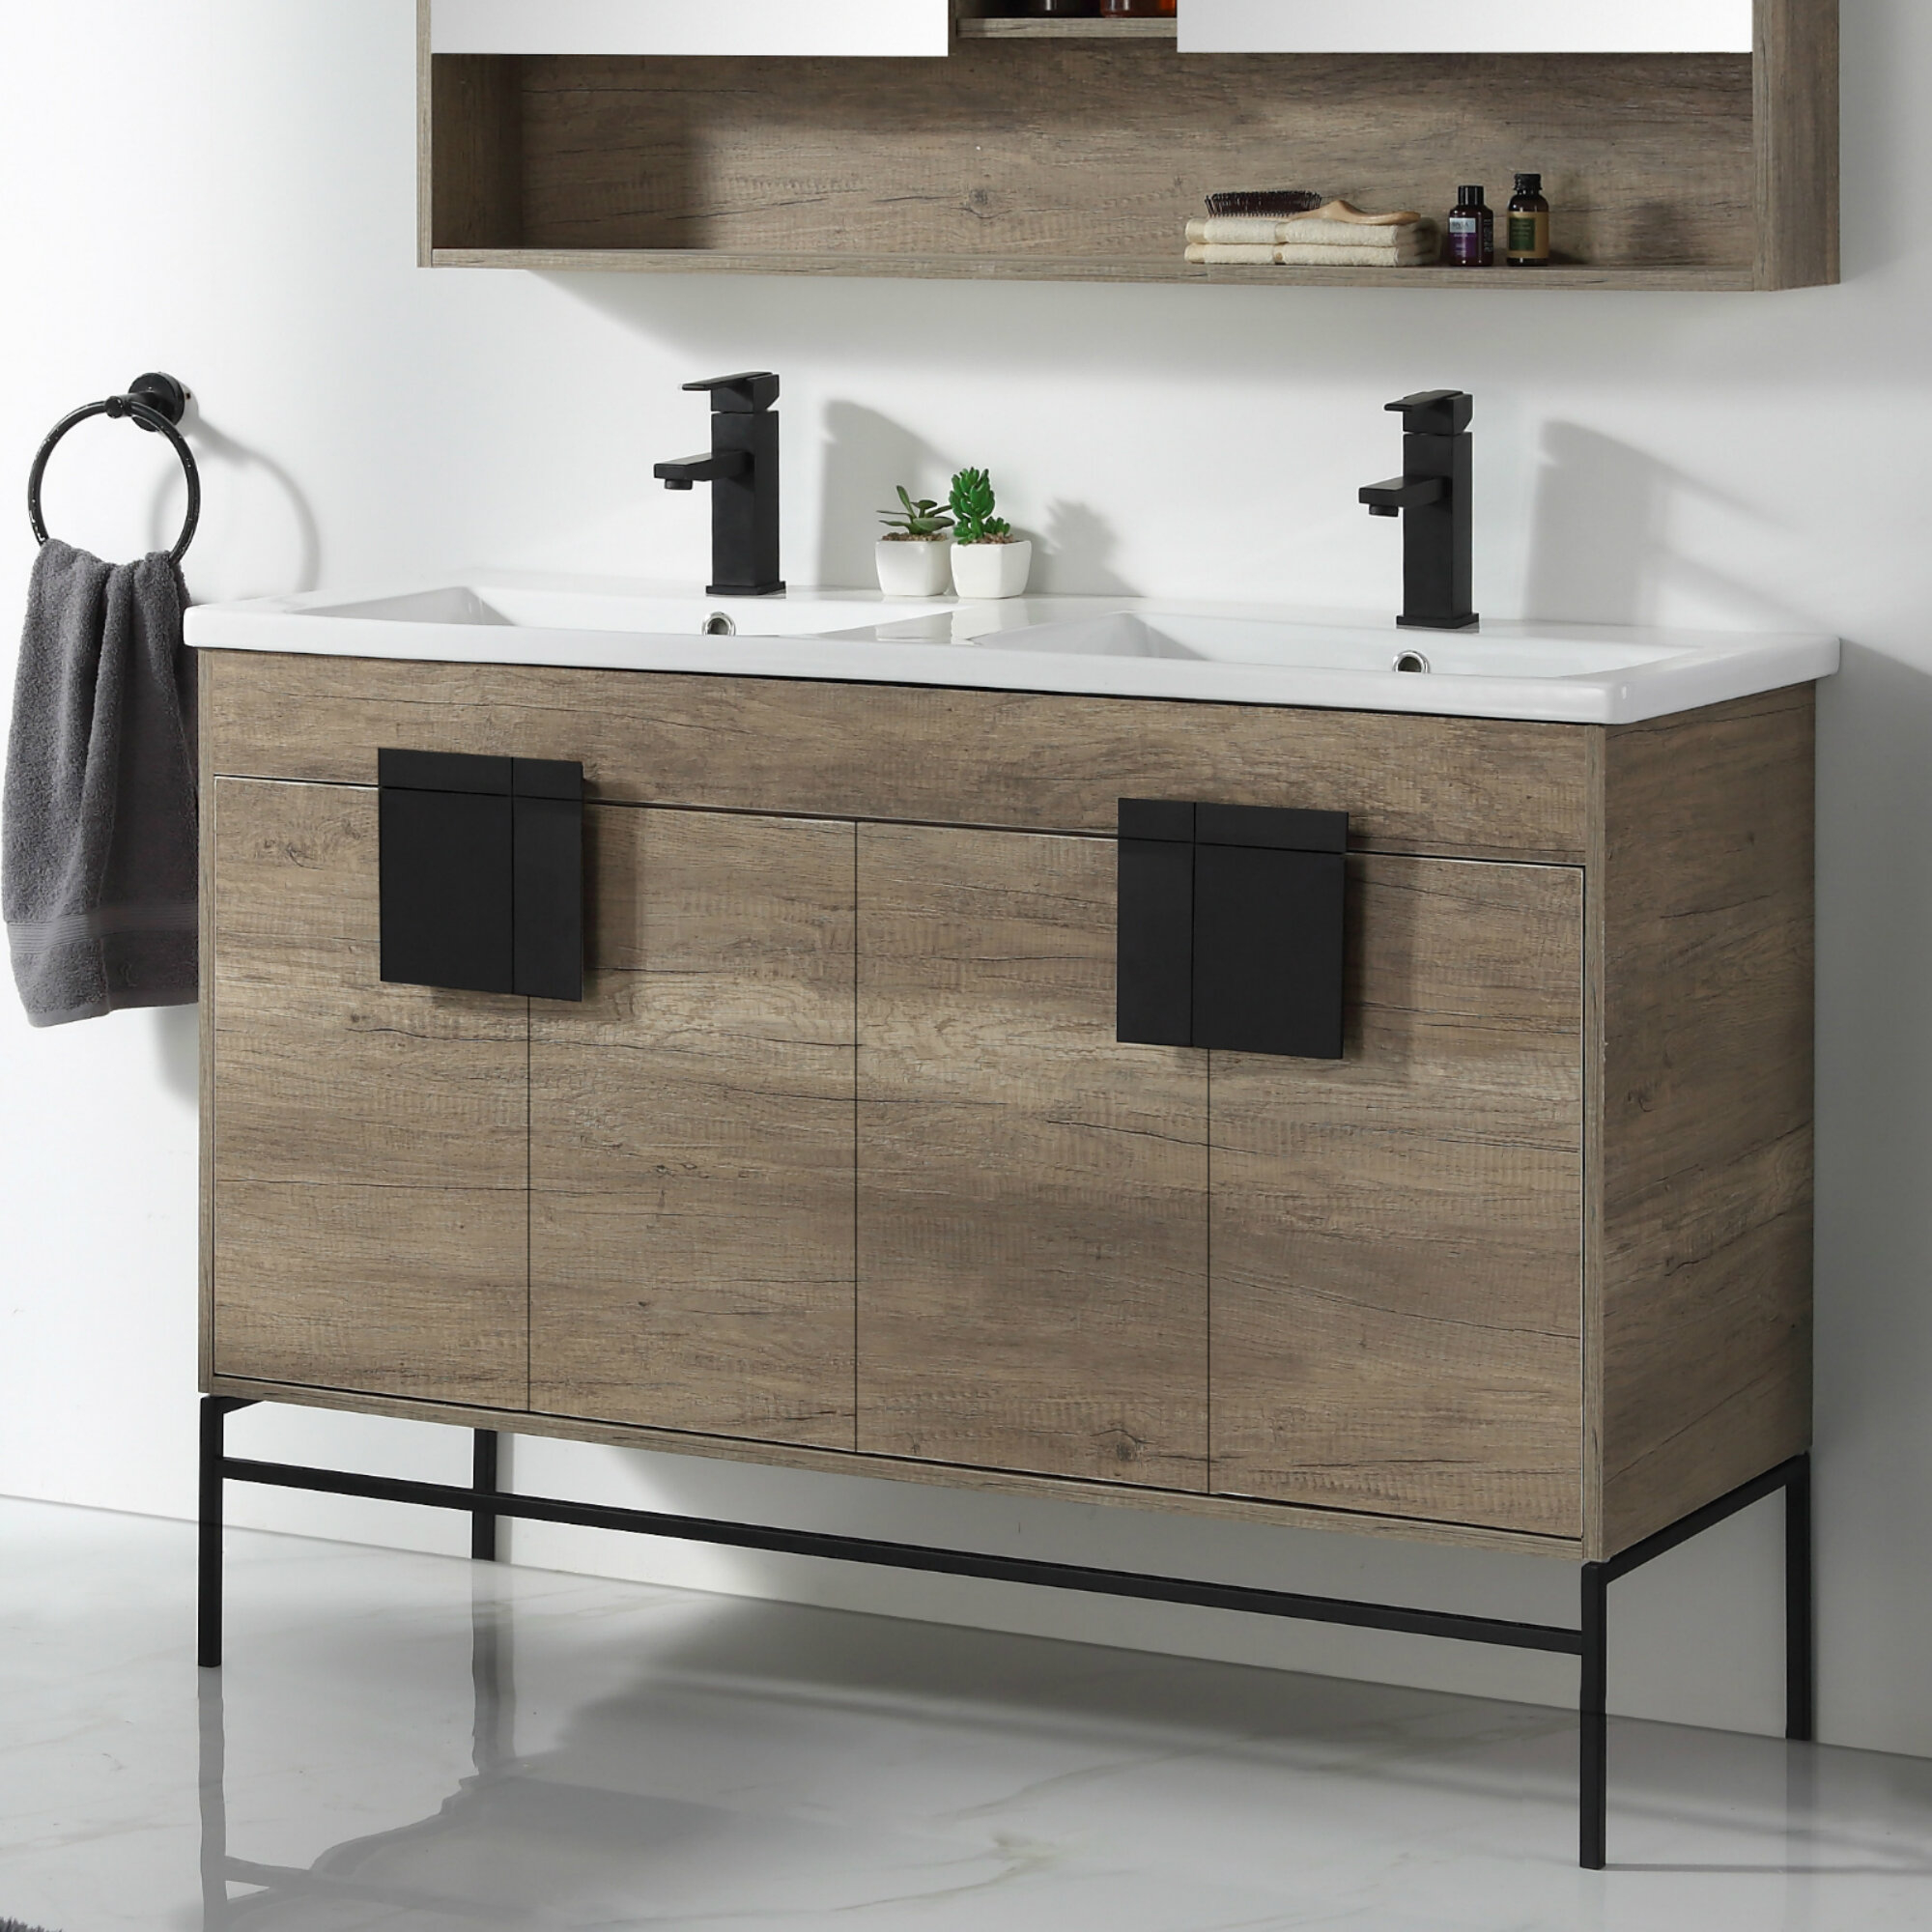 48 Inch Double Sink Vanity Visualhunt, 48 Double Sink Vanity Wood